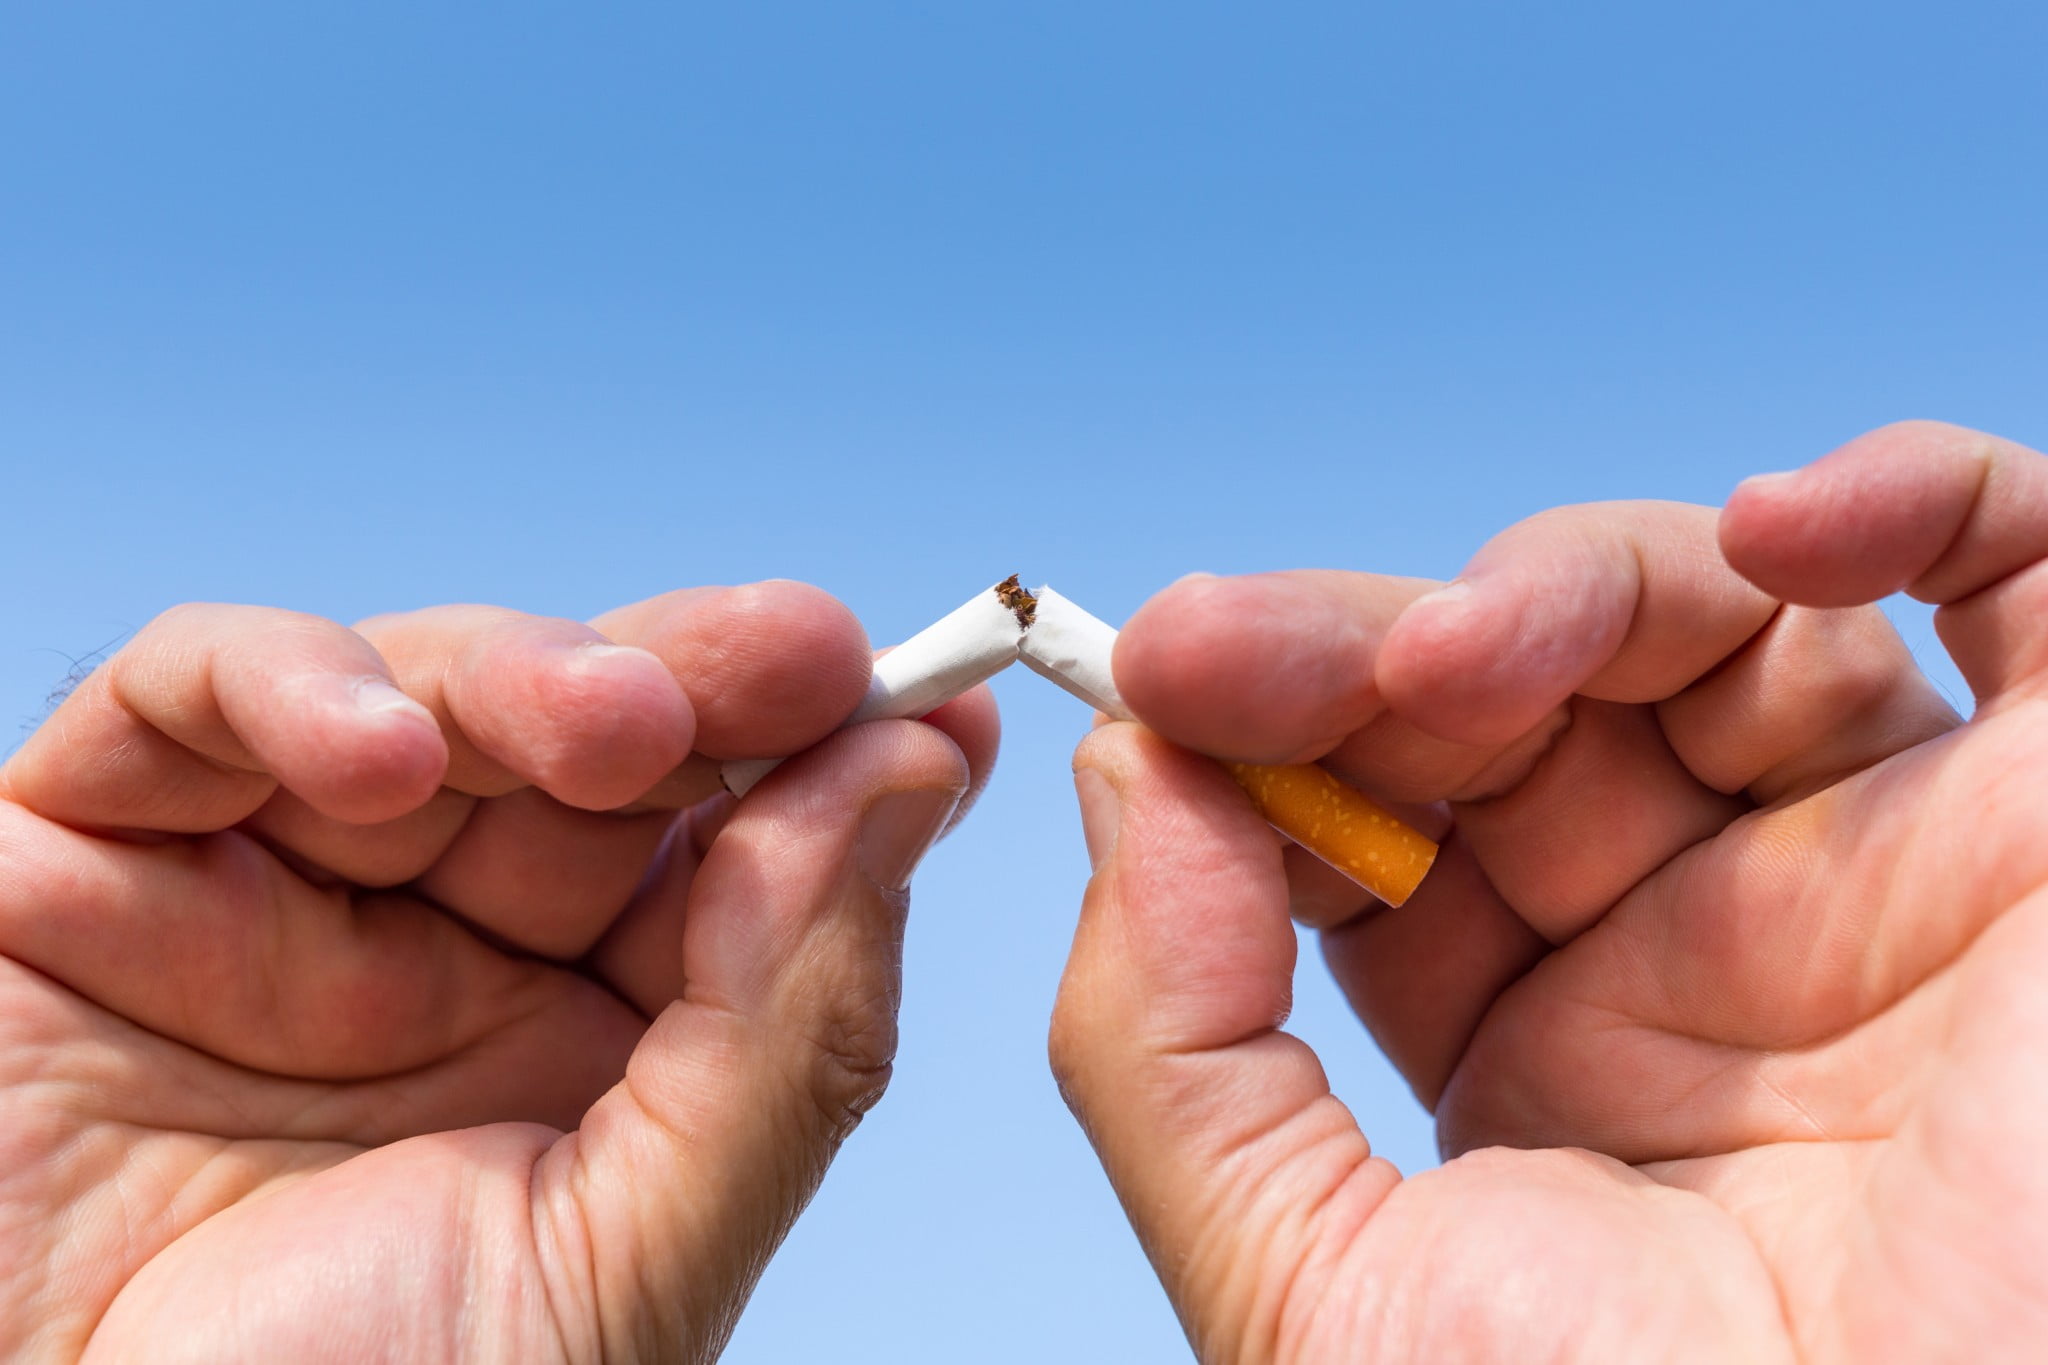 quit smoking: hands hold broken cigarette in front of blue sky